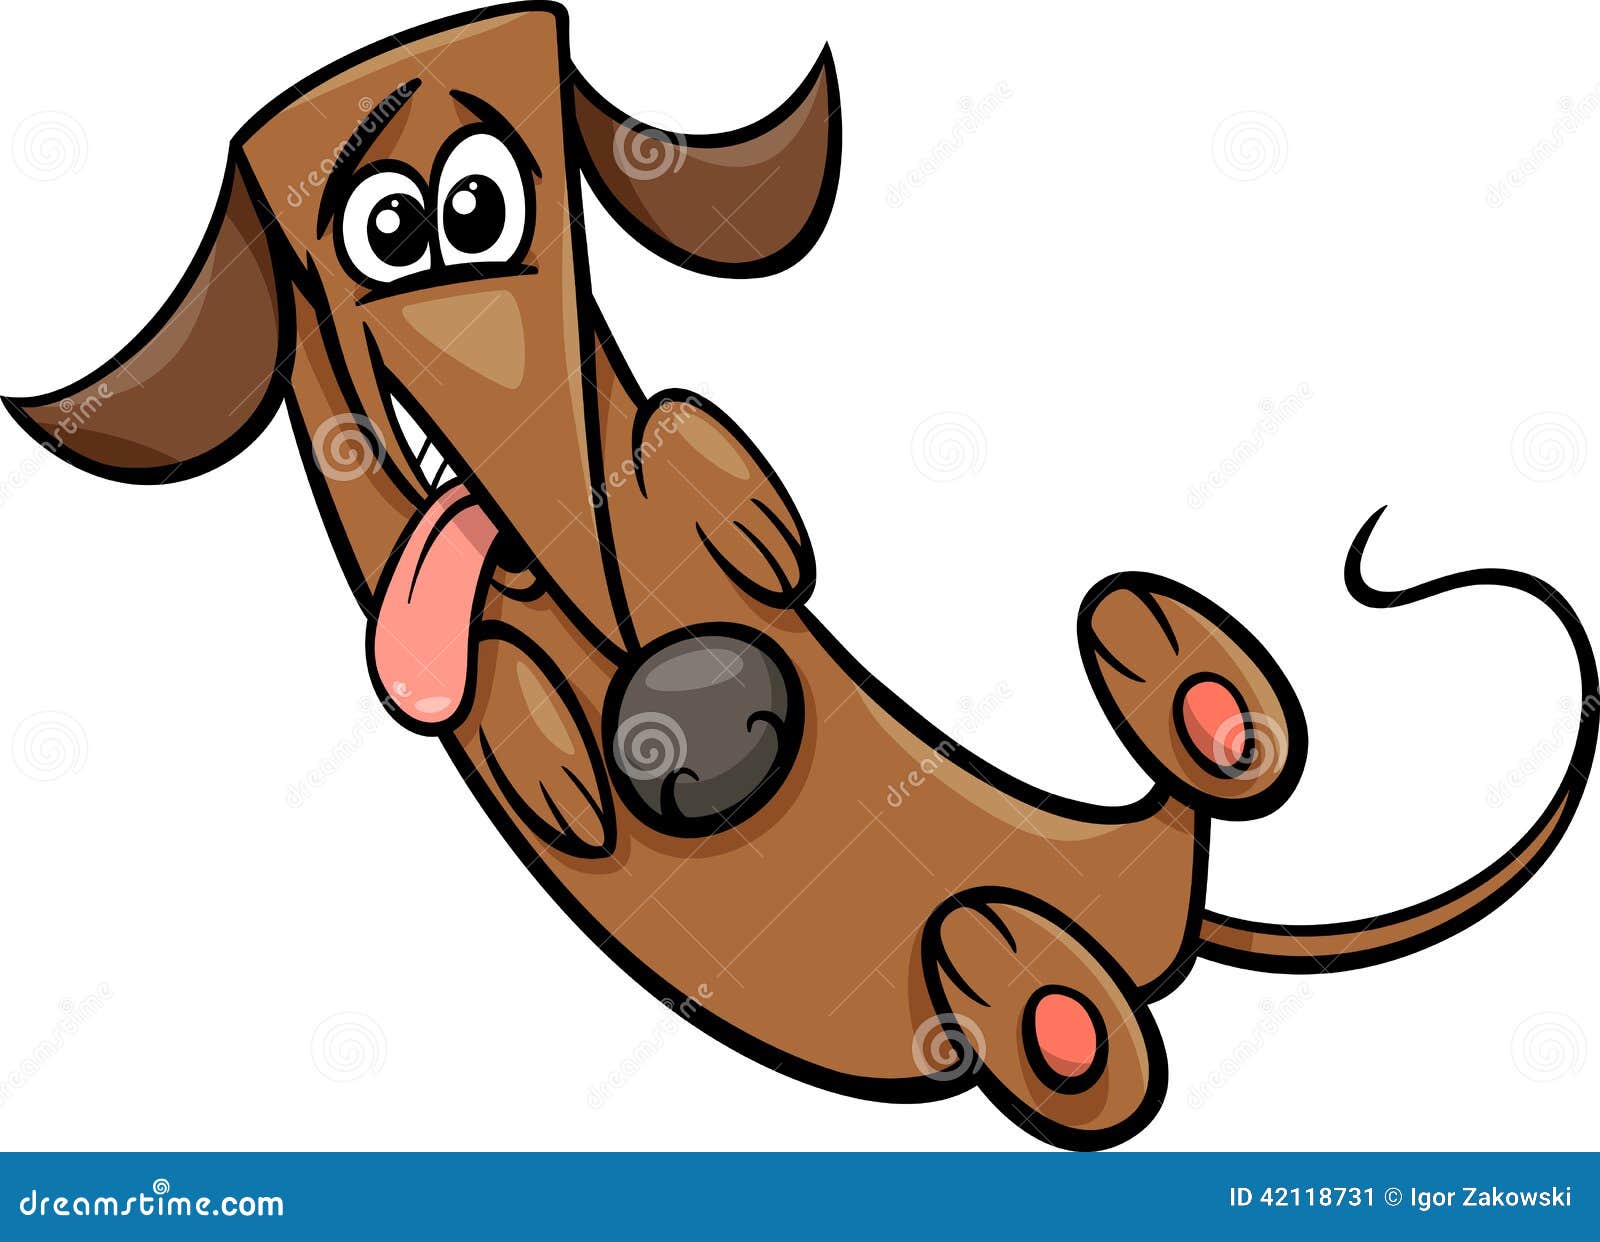 Cute Happy  Dog  Cartoon Illustration  Stock Vector 